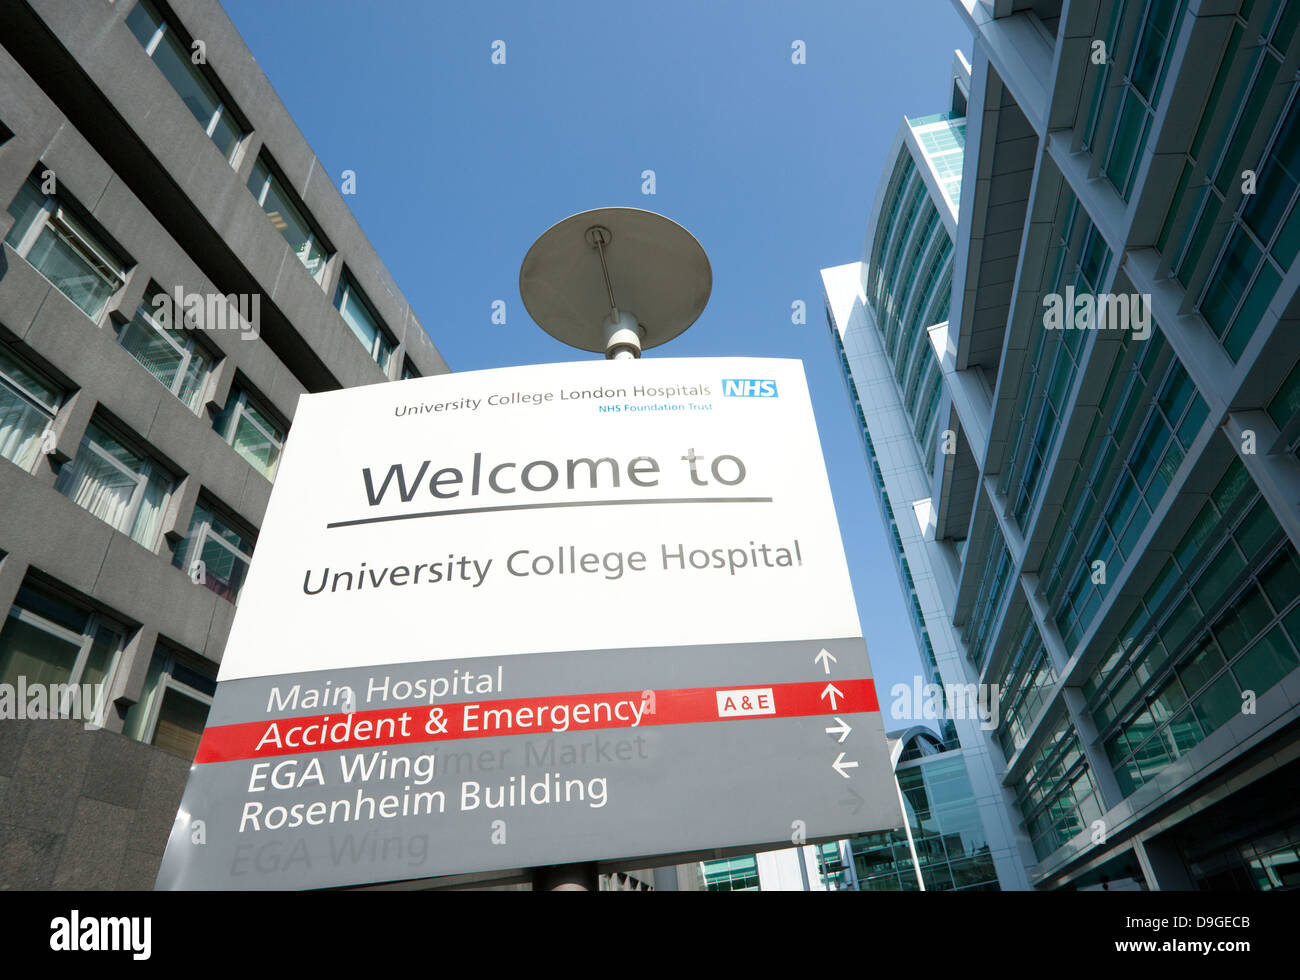 University College Hospital, Londres Banque D'Images